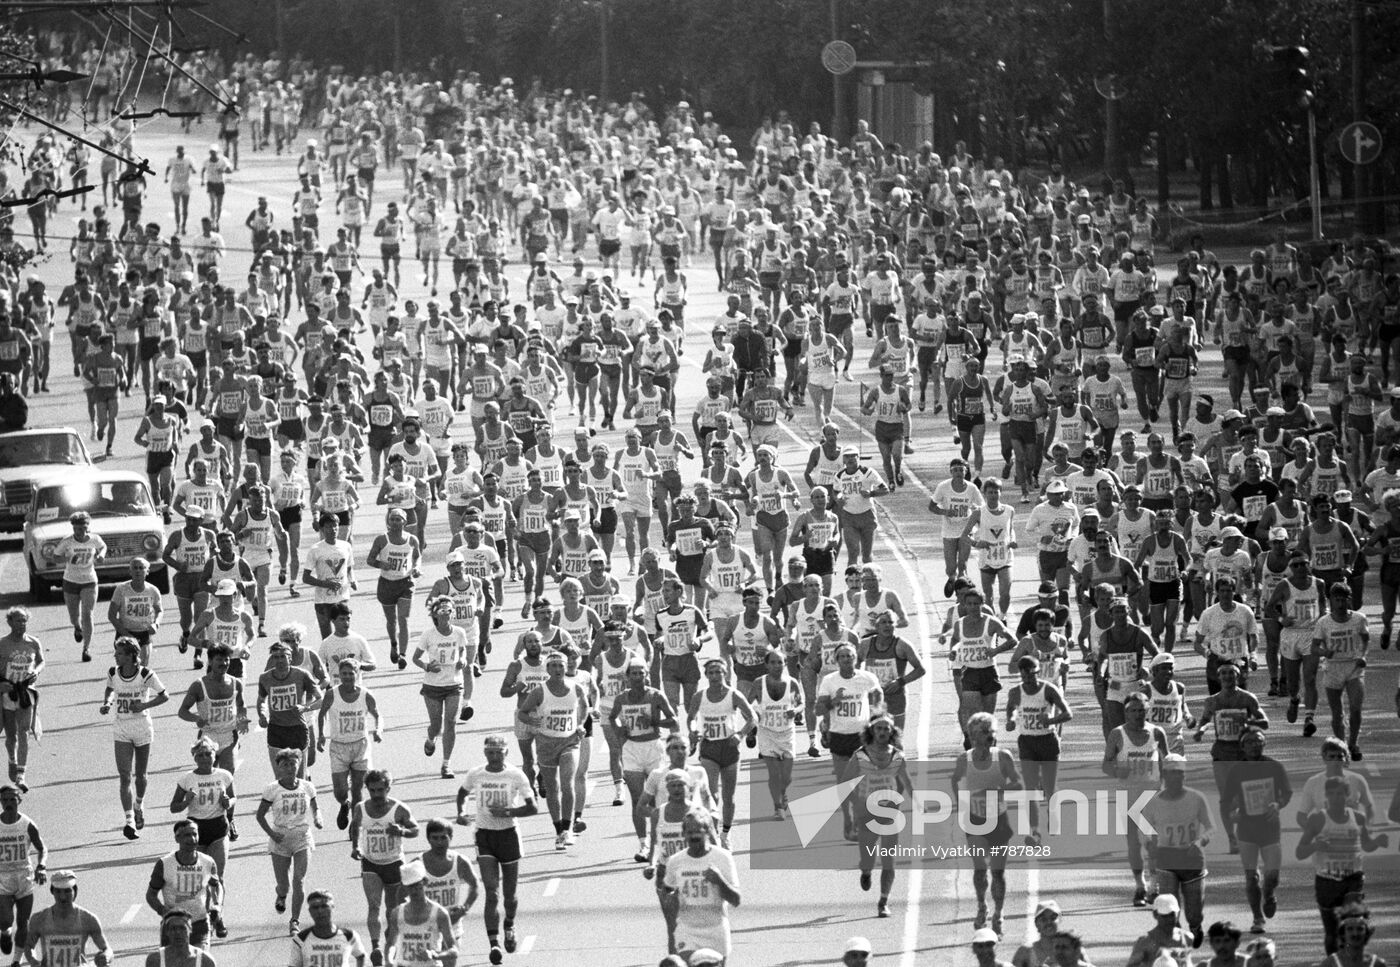 Moscow International Peace Marathon in 1987